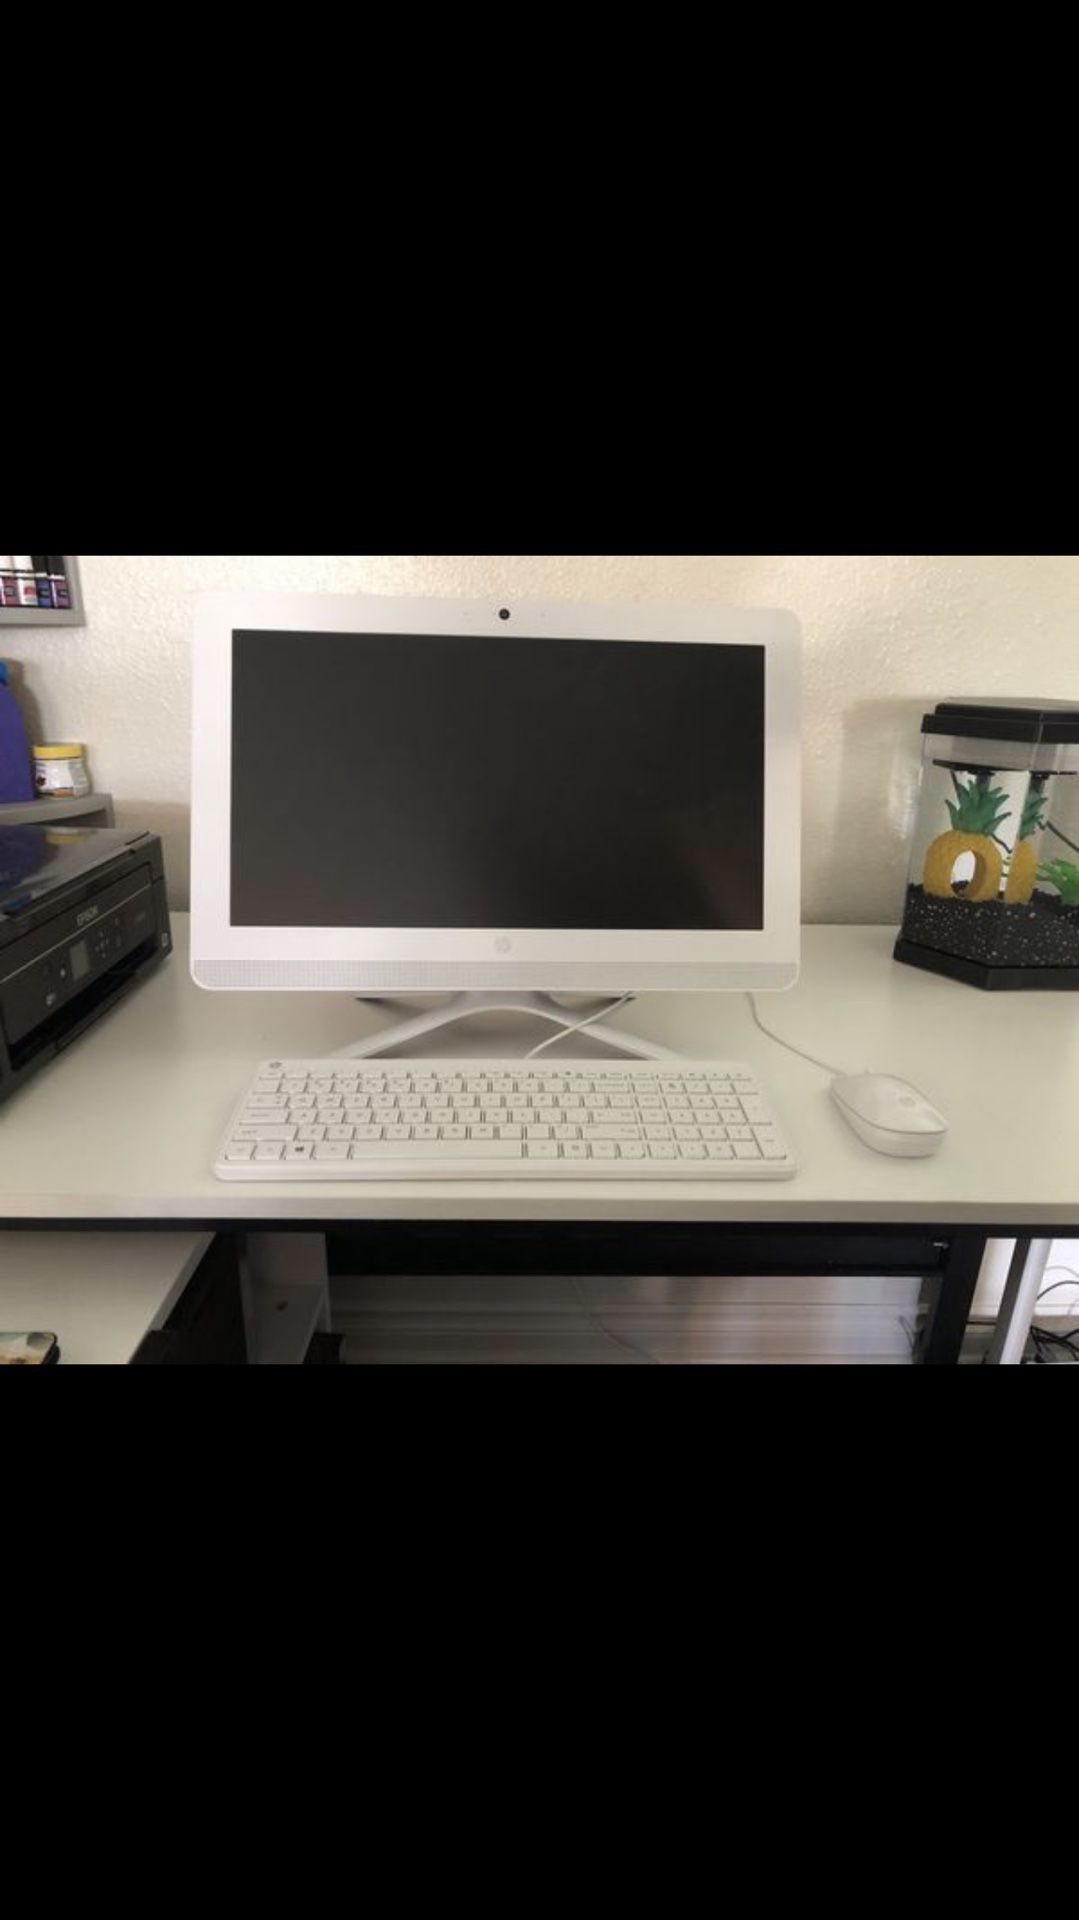 HP all in one desktop computer